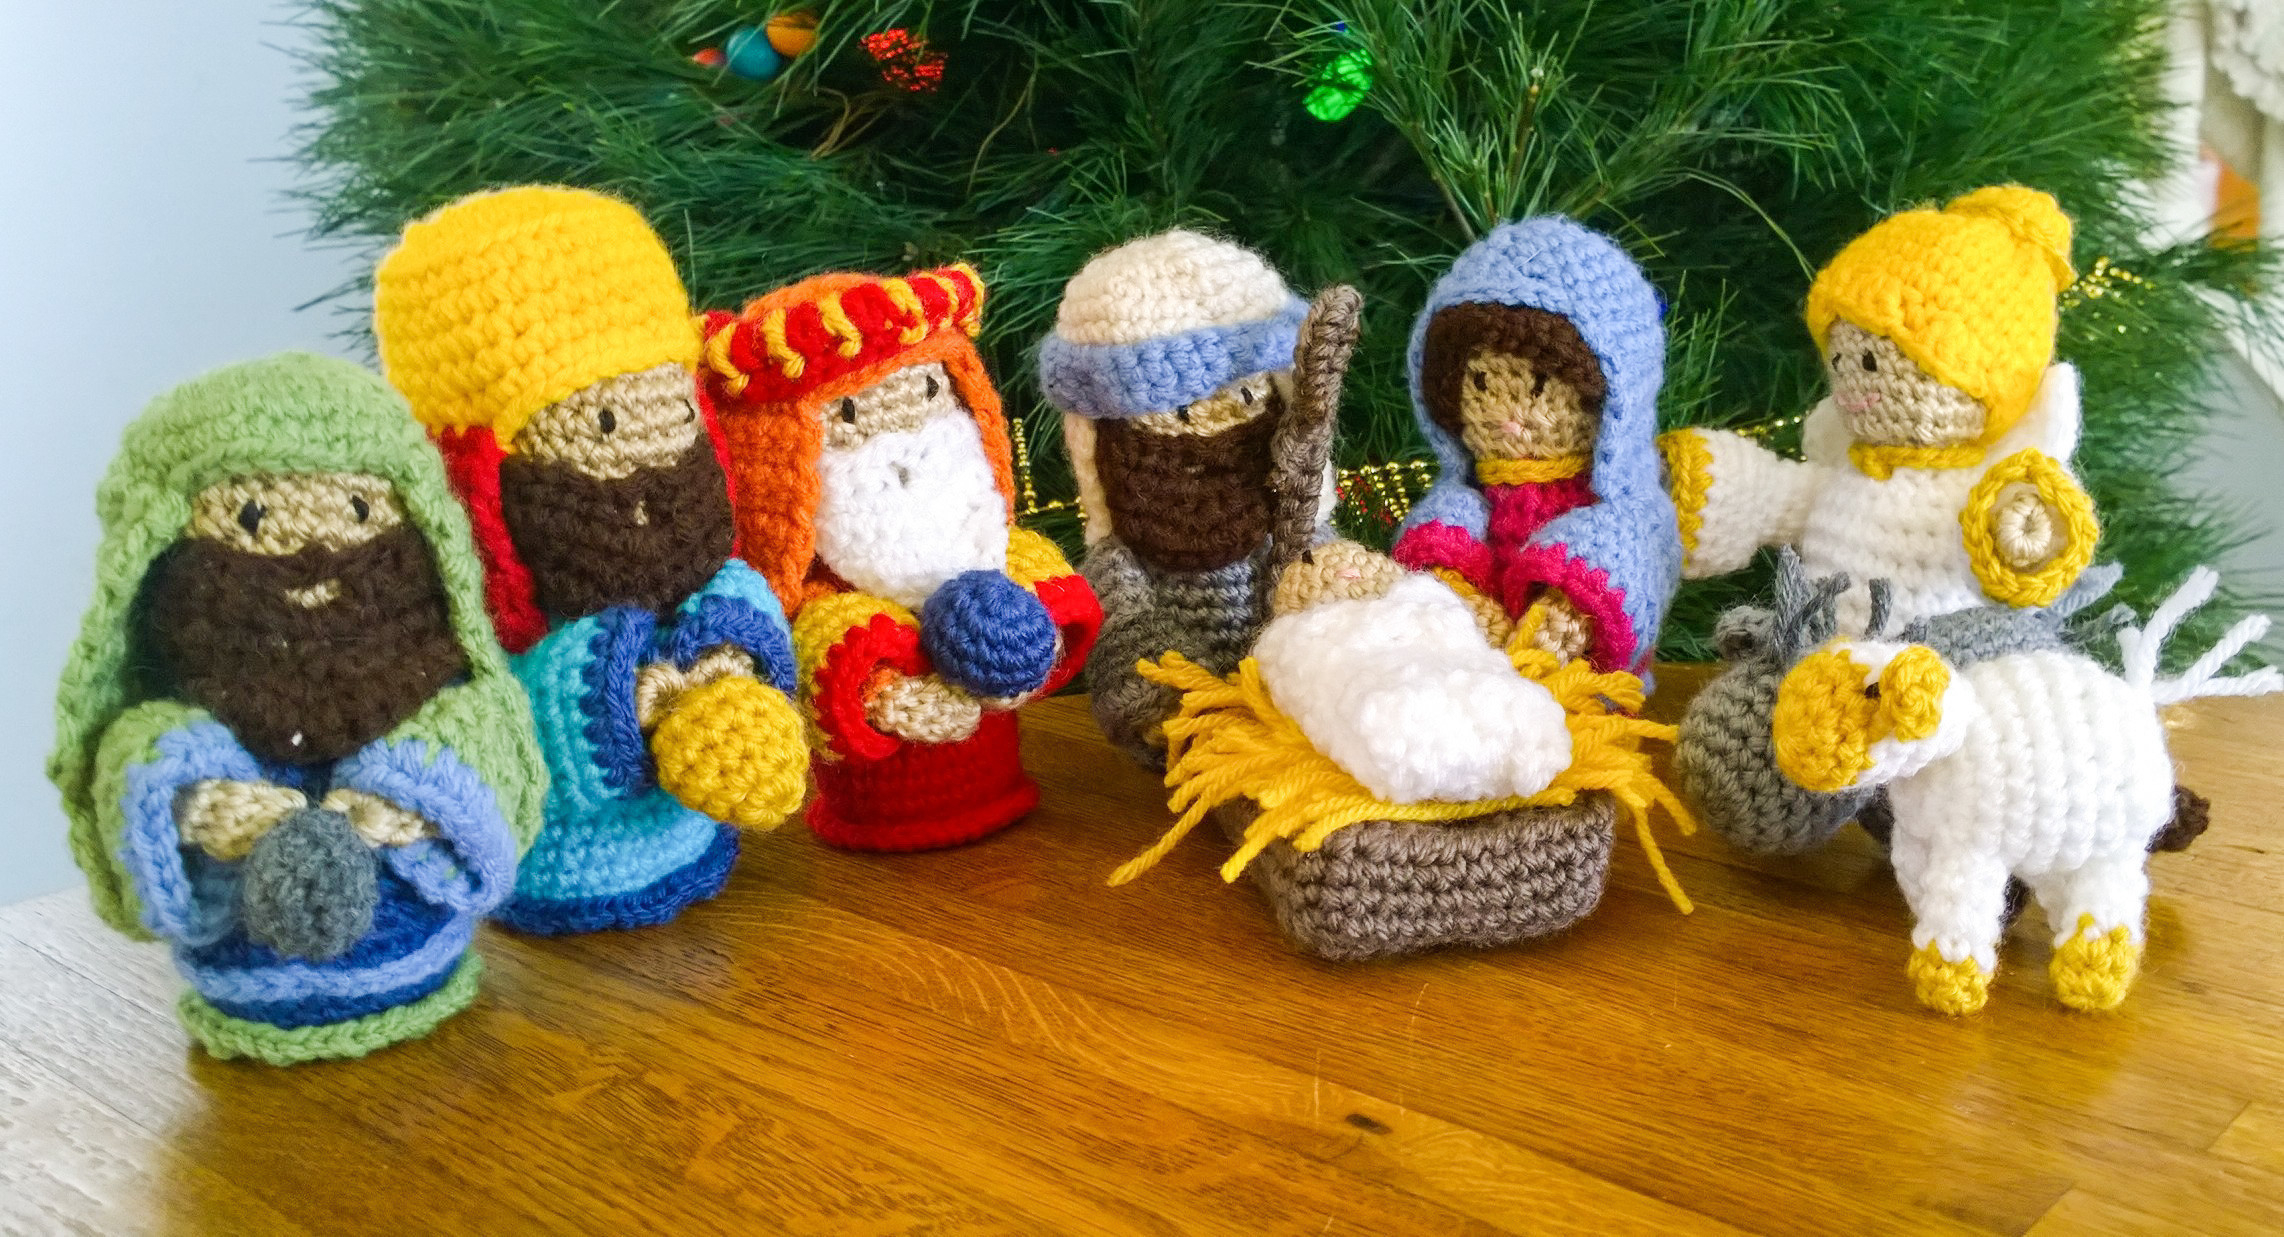 Nativity Knitting Pattern Free Amigurumi Nativity How To Make A Nativity Scene Yarncraft On Cut